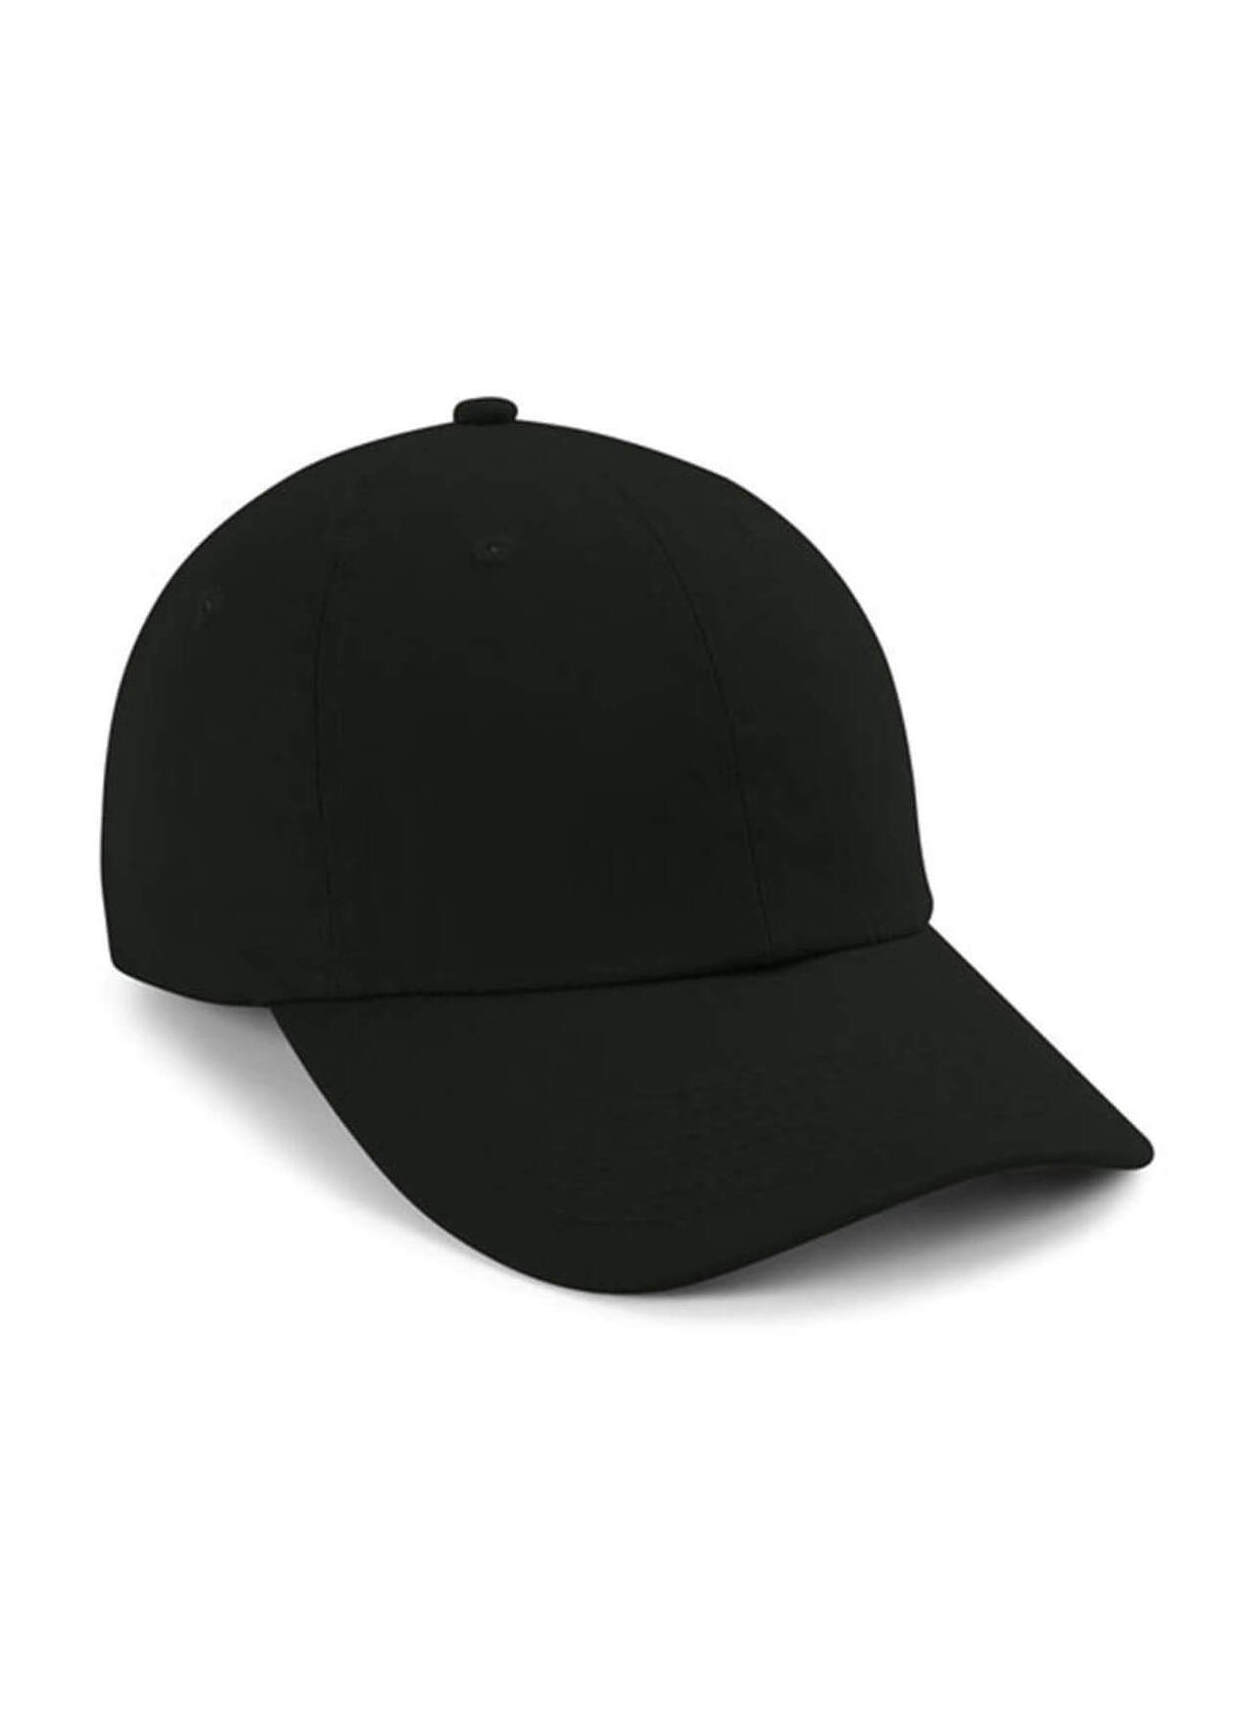 Imperial Black The Original Buckle Hat